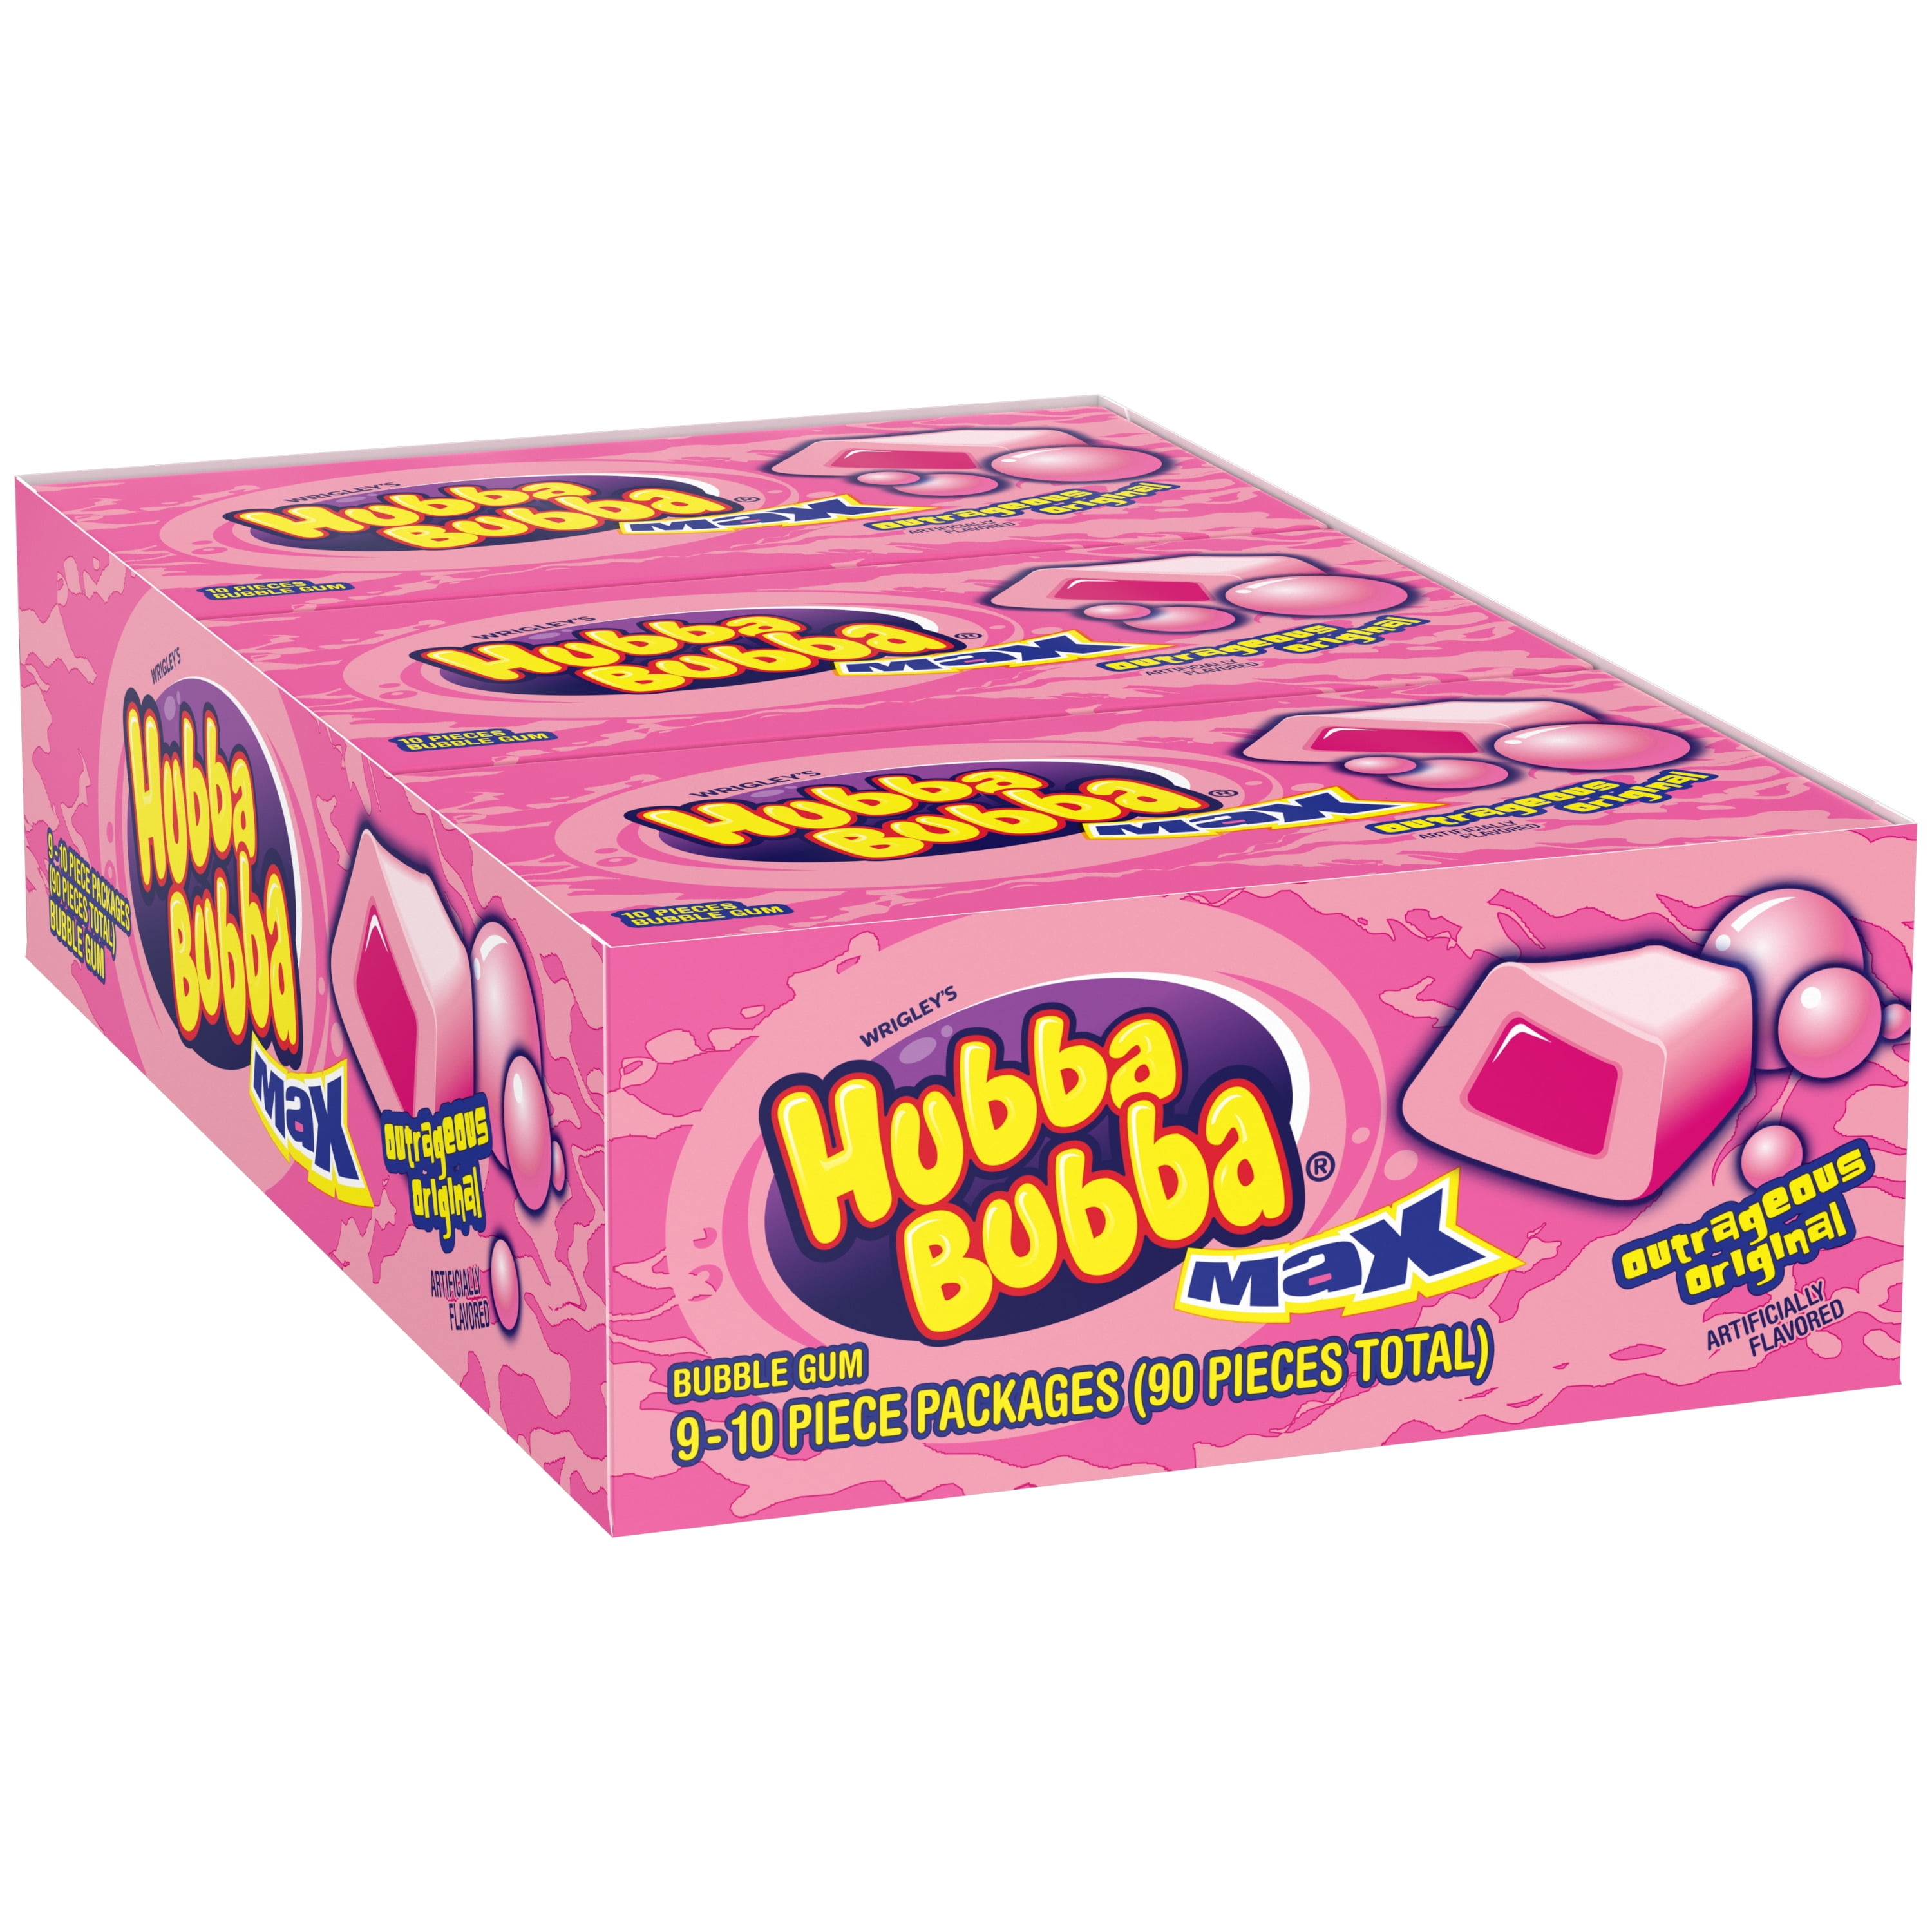 Hubba Bubba Max Original Chewing Gum, 10 piece, 9 ct